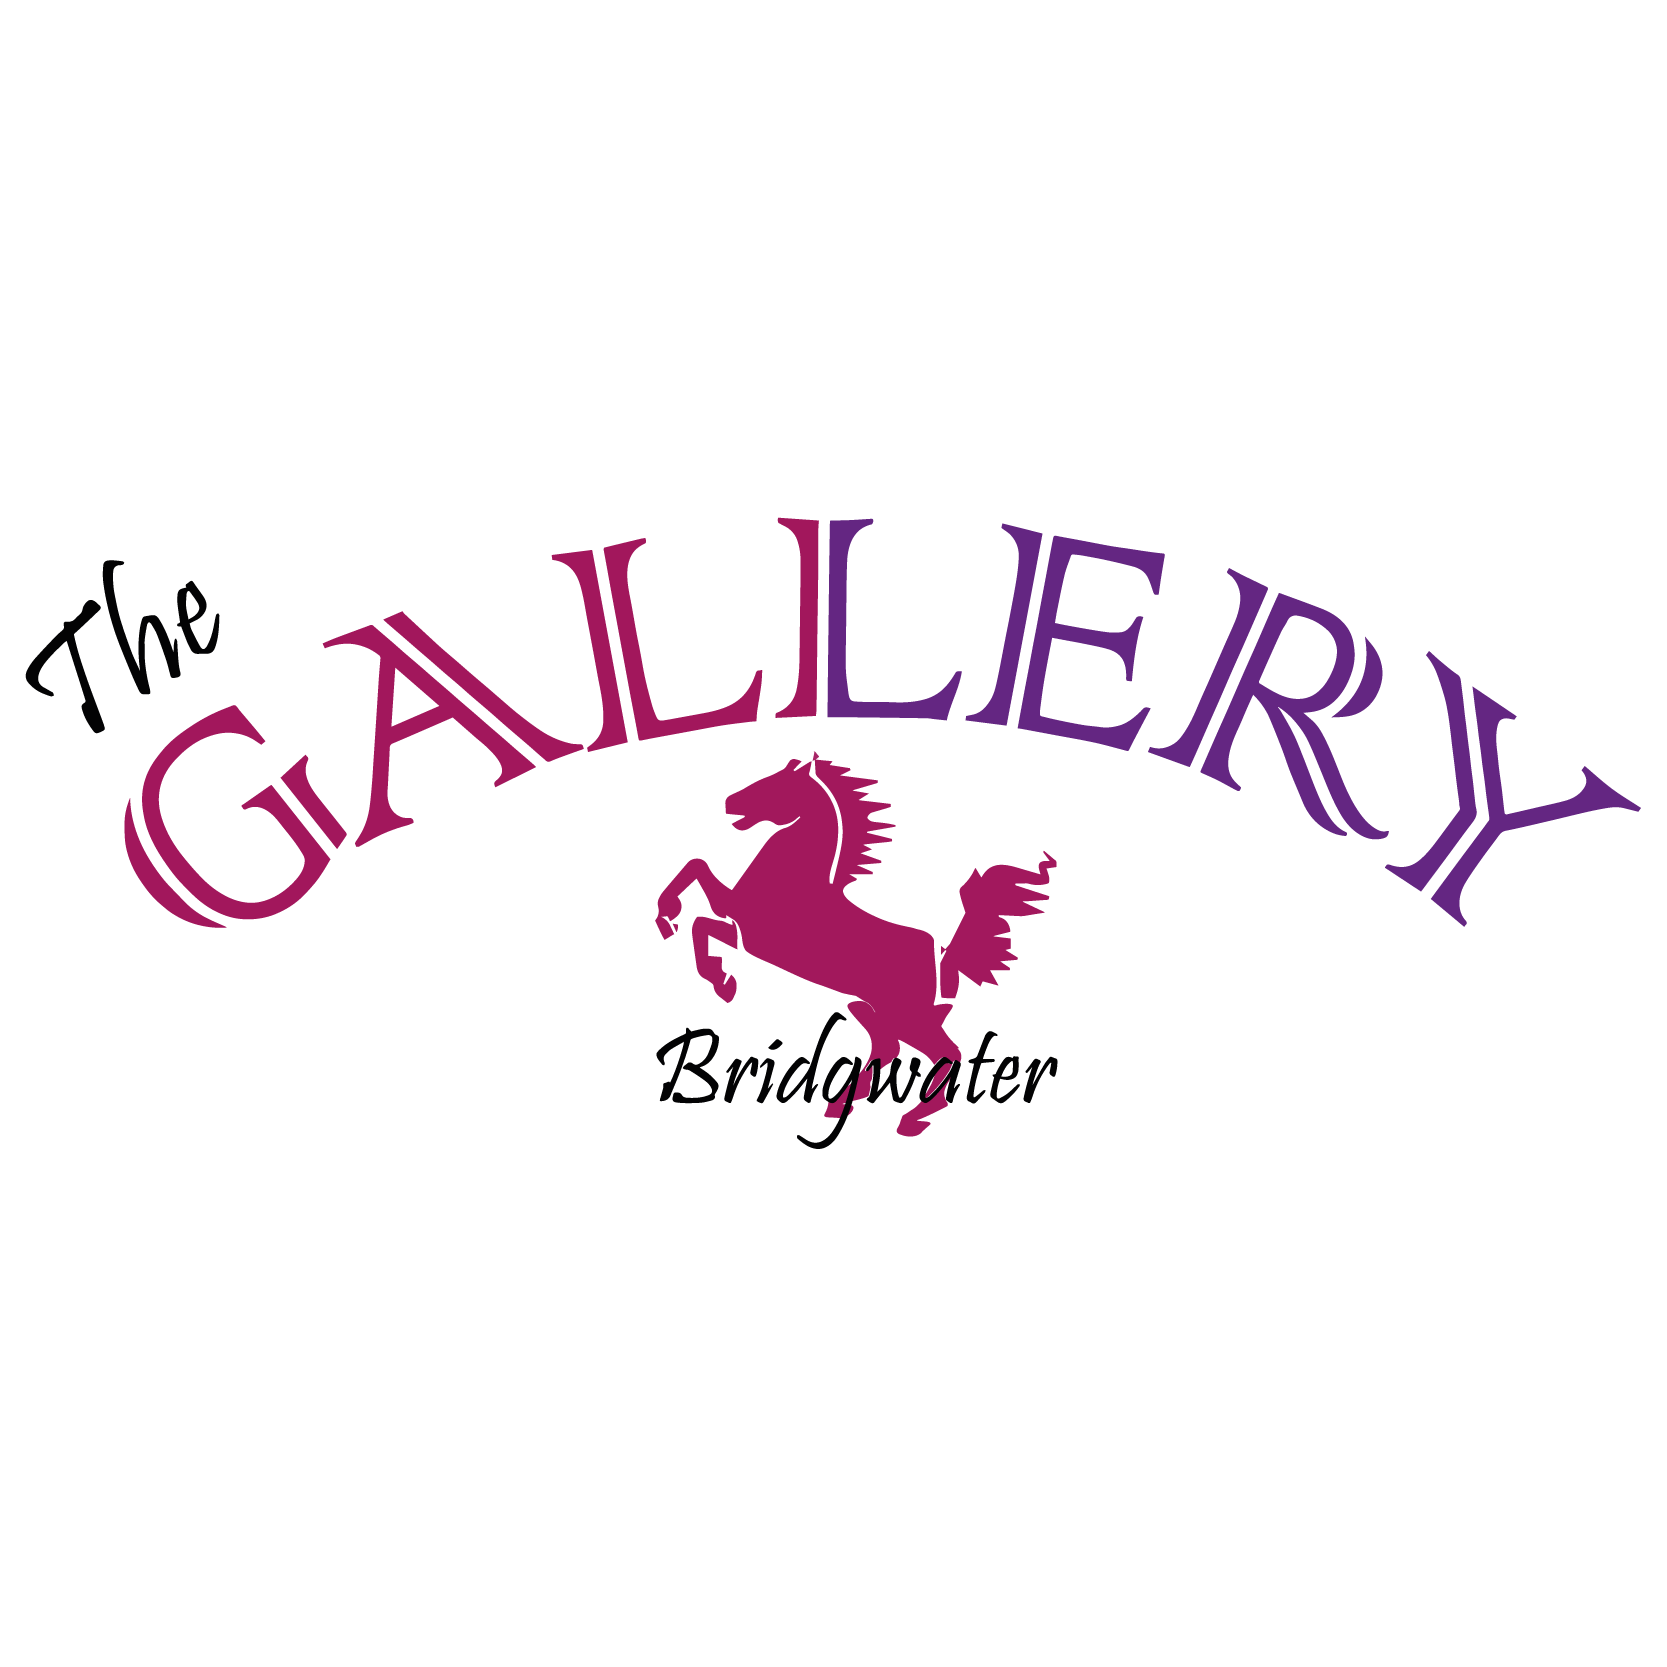 The Gallery Pub